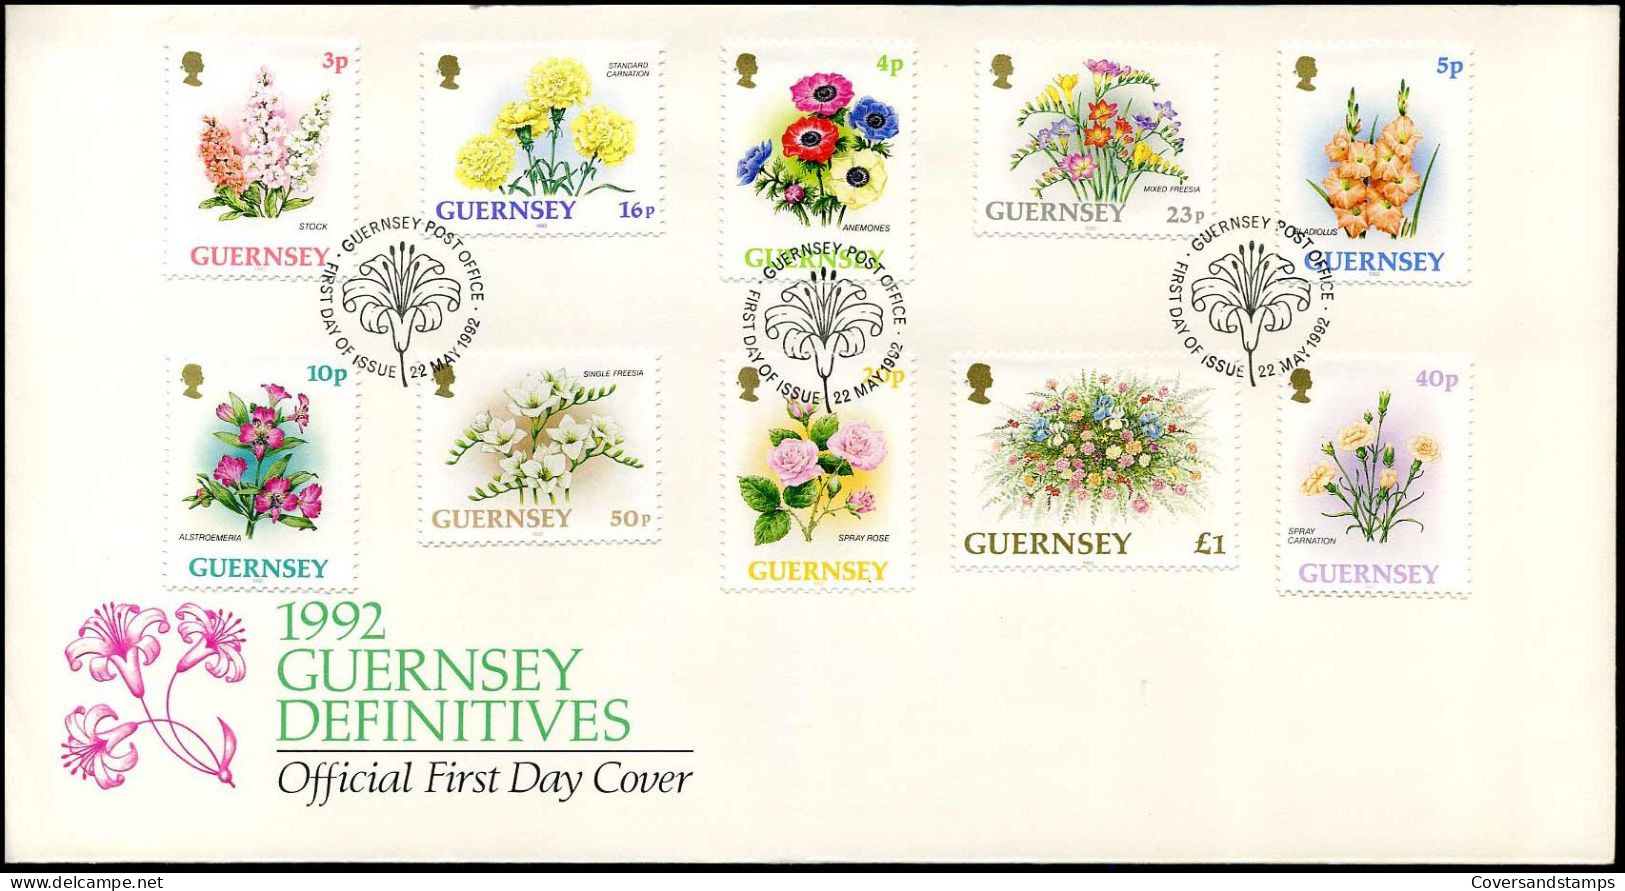 FDC - Guernsey Definitives 1992 - Guernsey